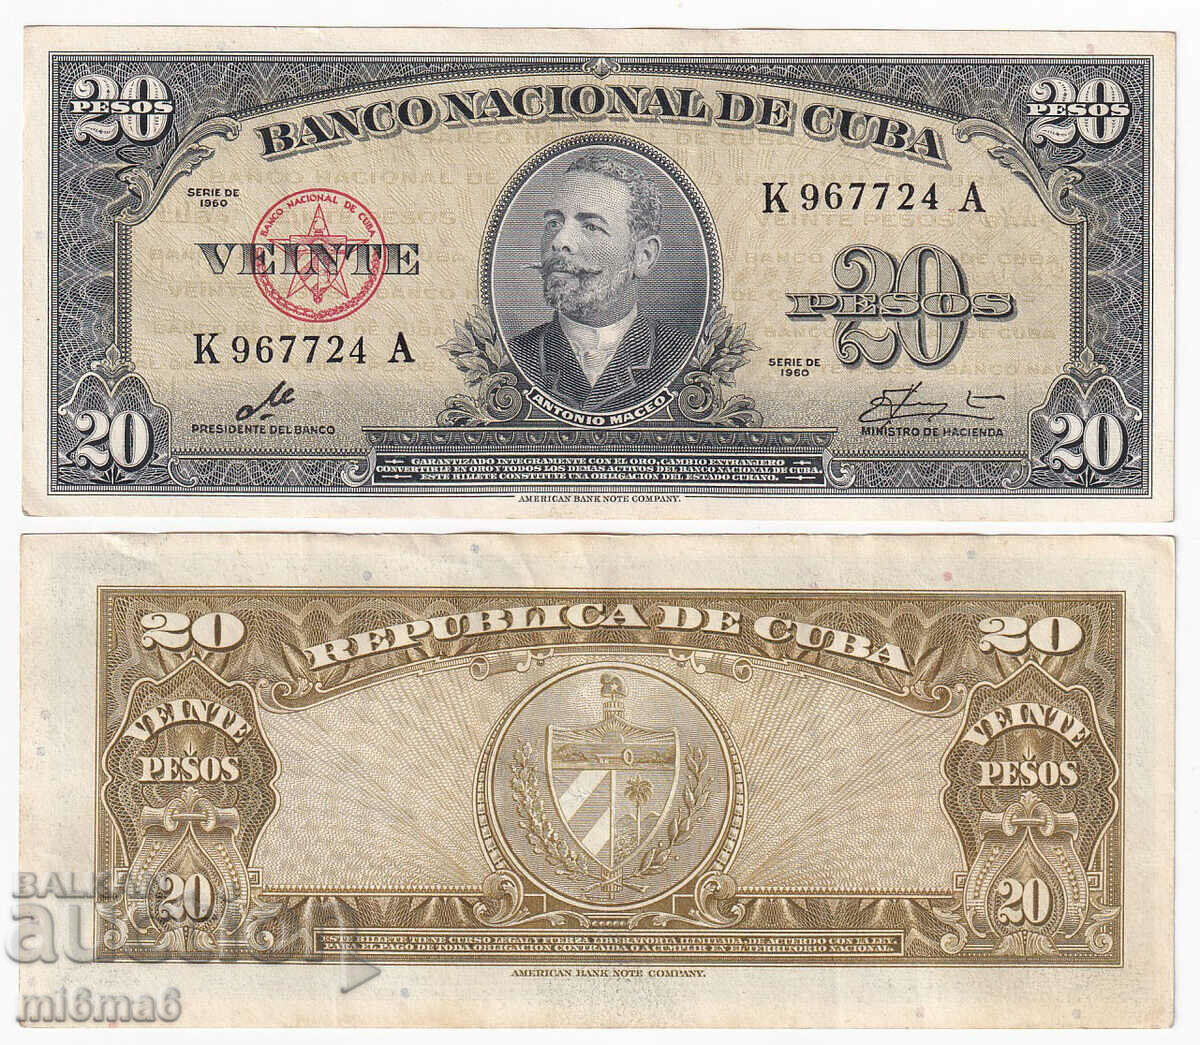 MI6MA6 - Cuba - Banknote with the signature of Che Guevara